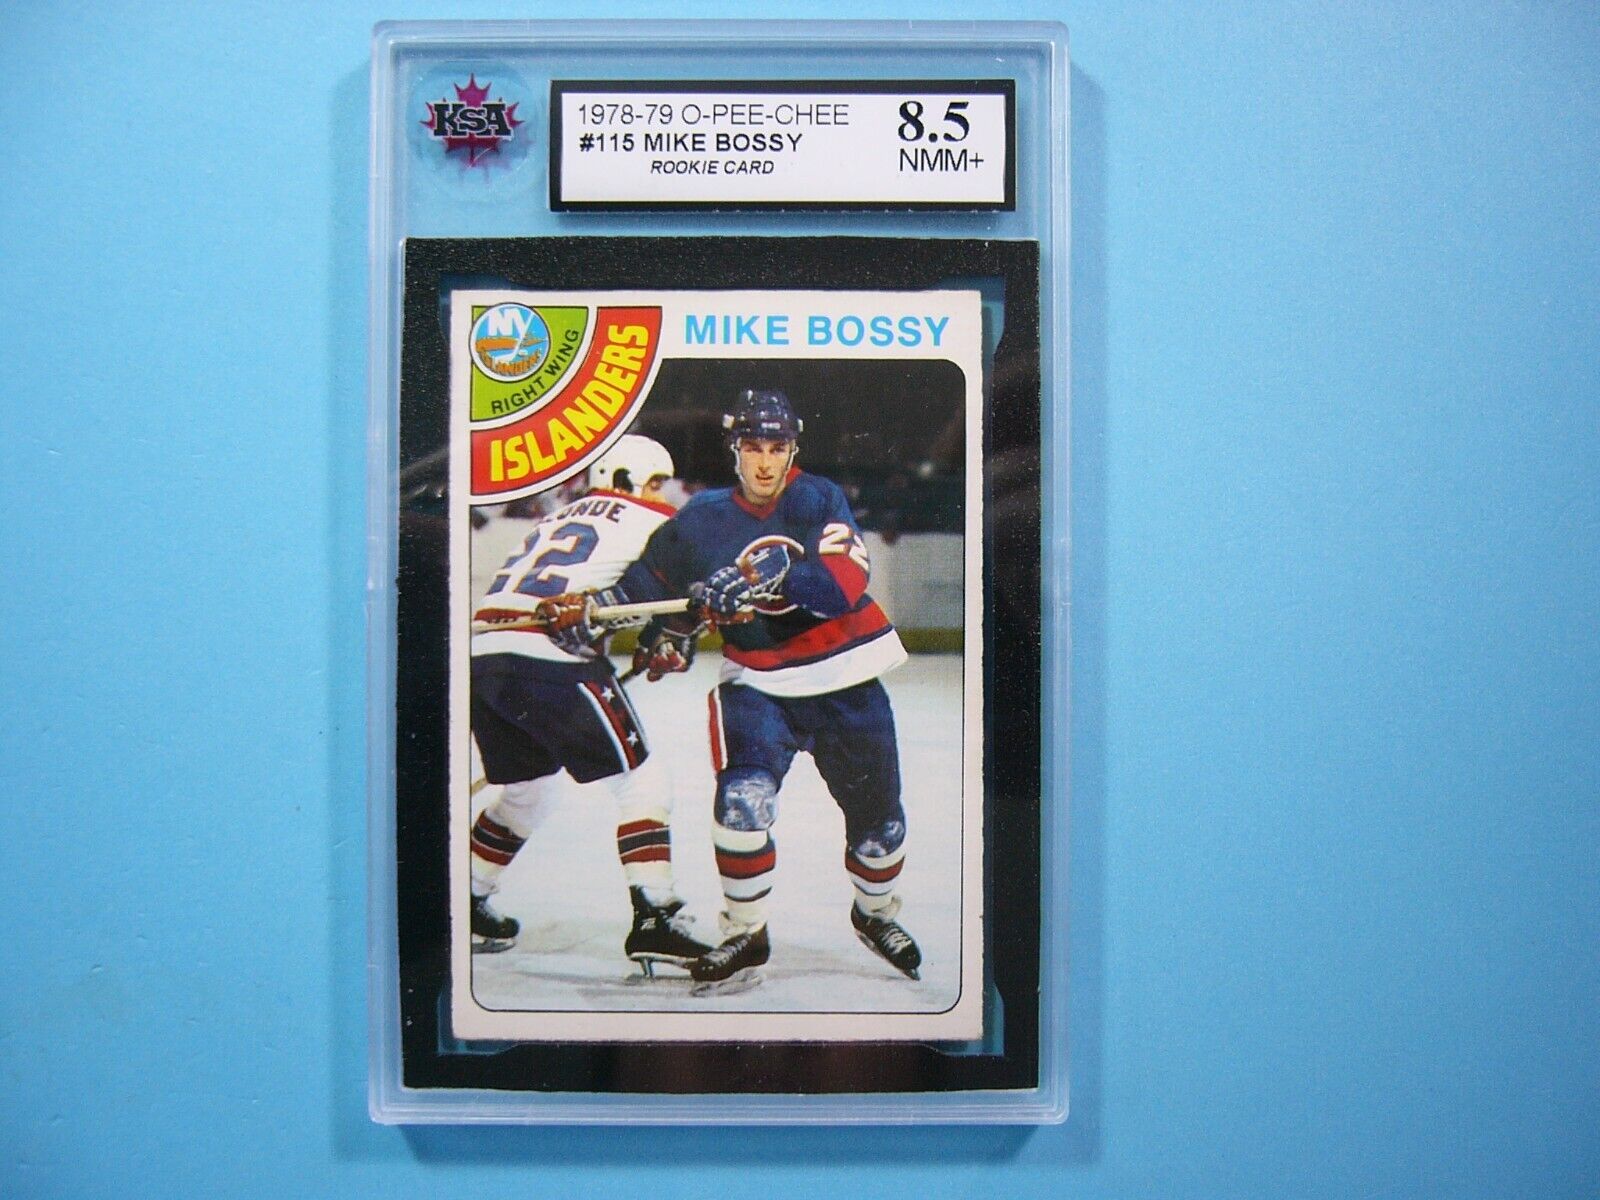 1978/79 O-PEE-CHEE NHL HOCKEY CARD 115 MIKE BOSSY ROOKIE RC KSA 8.5 NM/MINT+ OPC